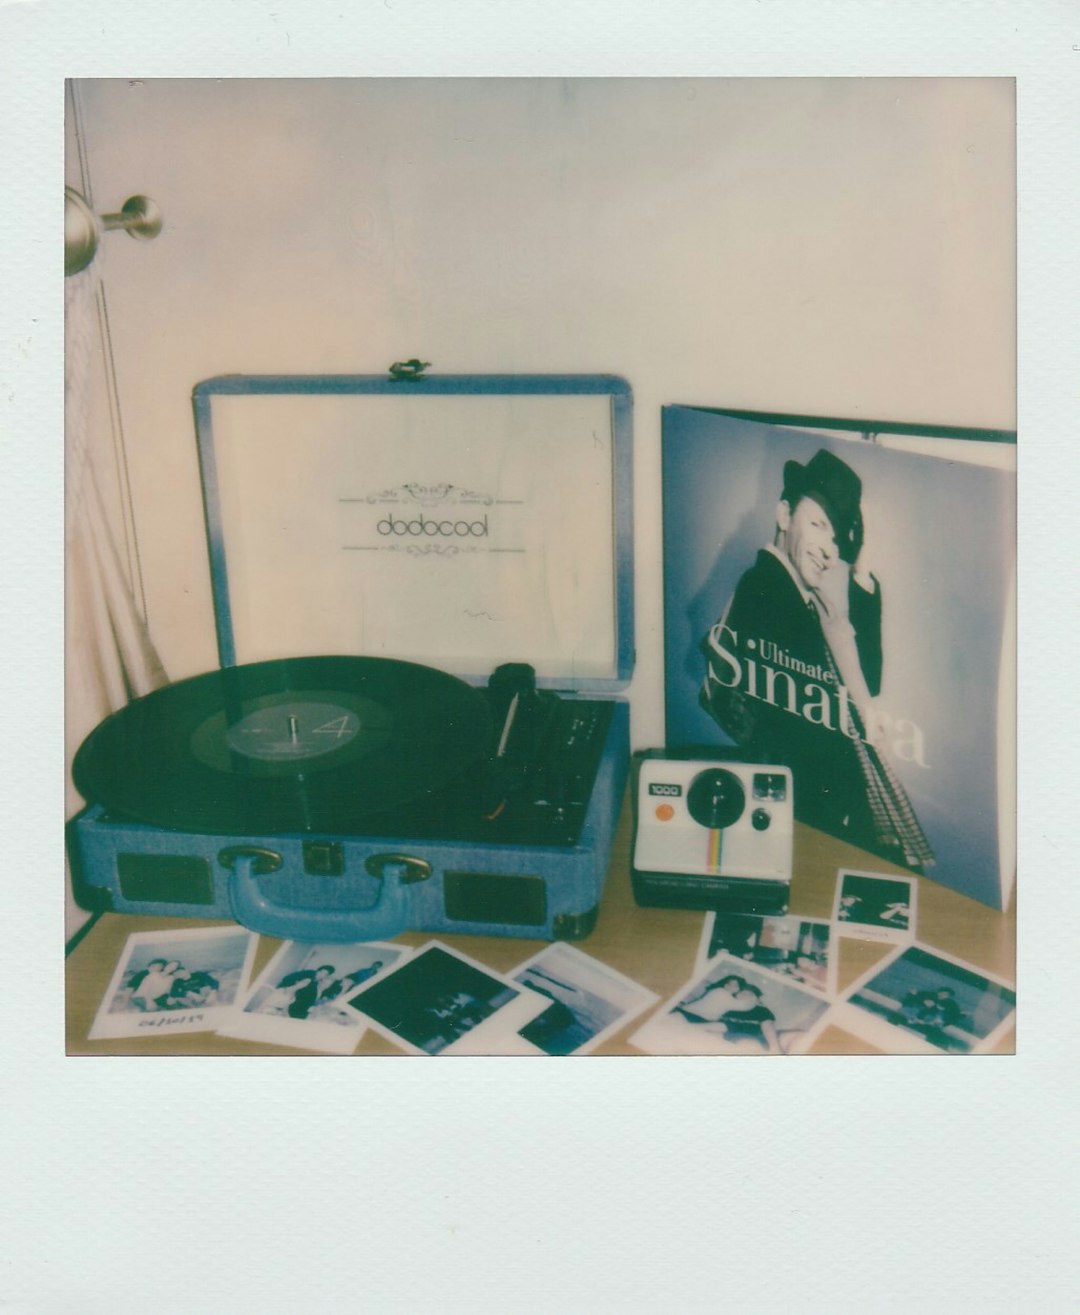 Sinatra record album and record player with Polaroid photos